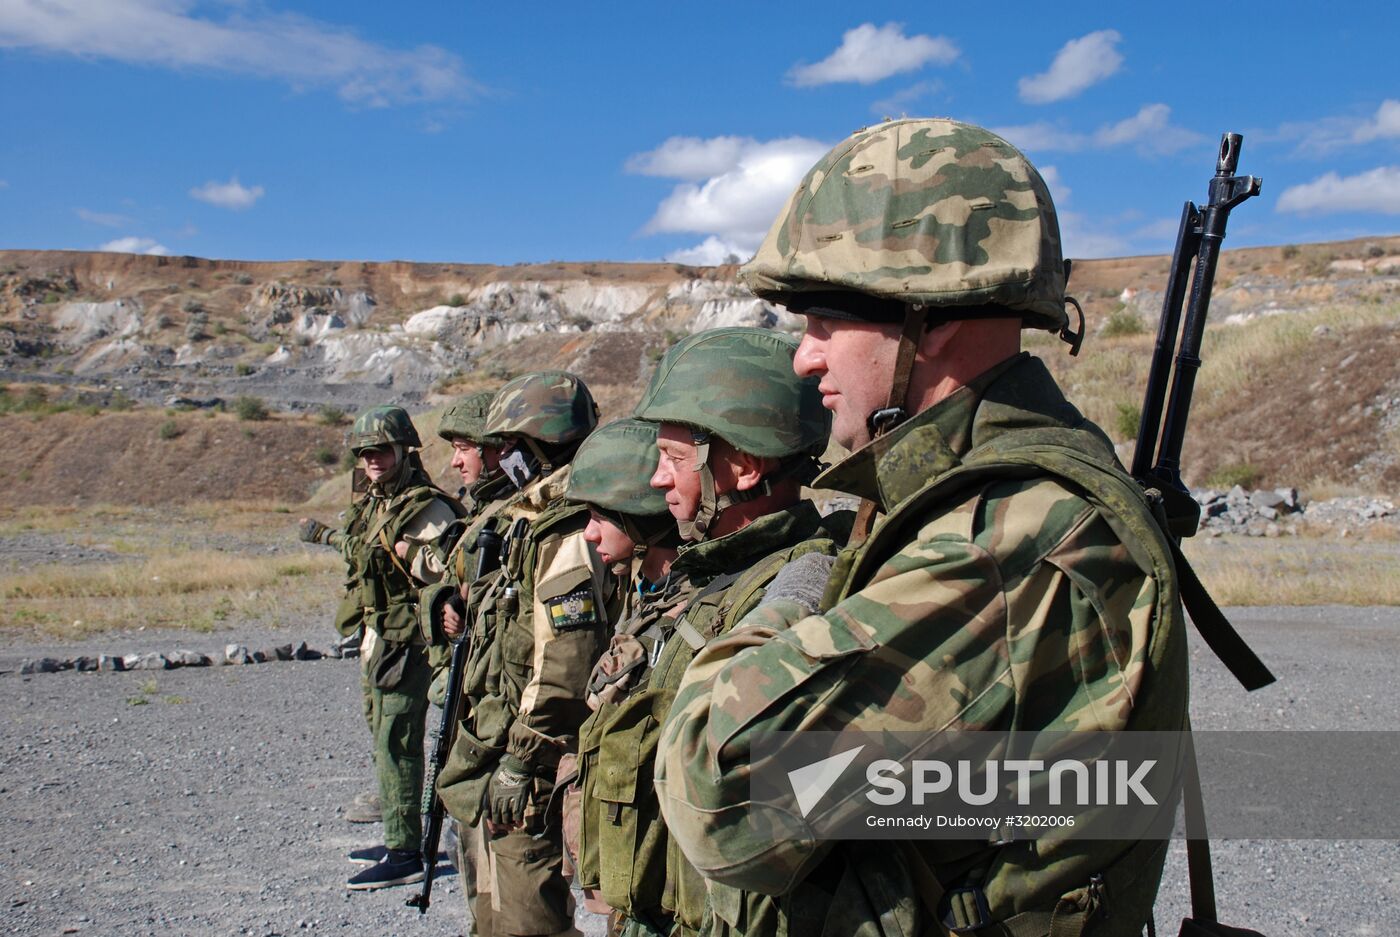 First Slavyansk Bragade of Dontesk People's Republic's armed forces